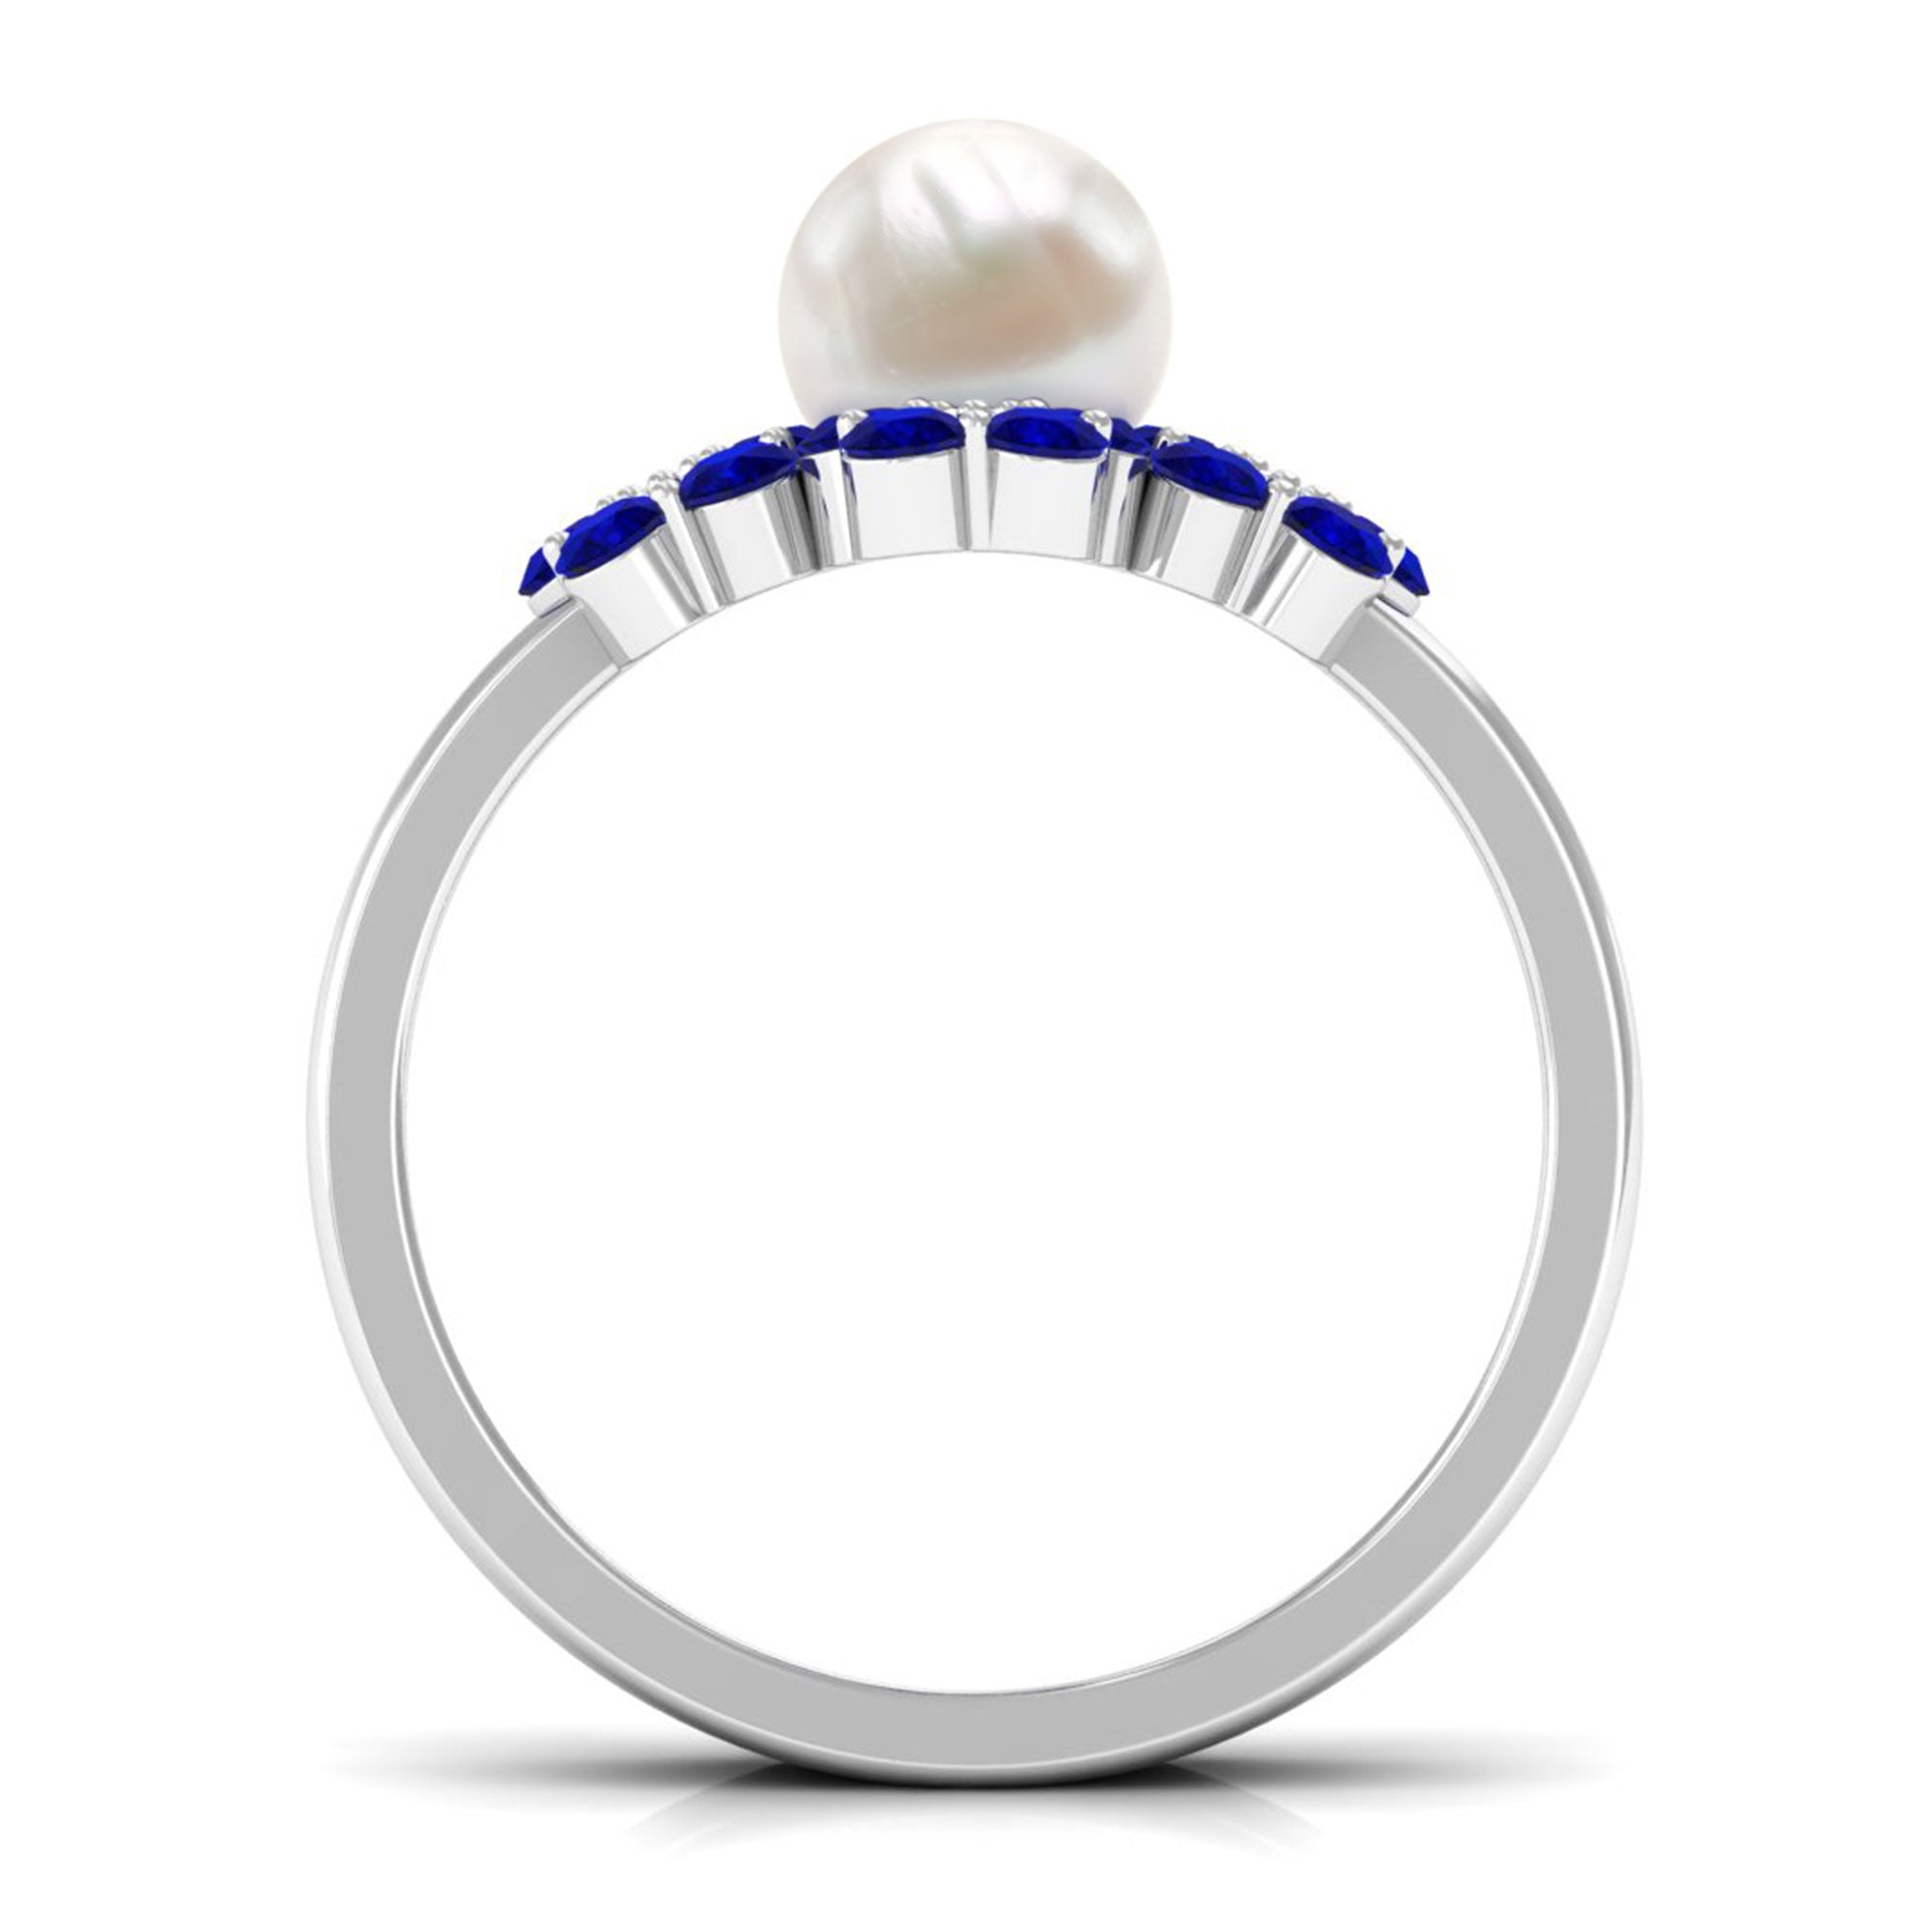 Arisha Jewels-Pearl Bridal Ring Set with Blue Sapphire Floral Enhancer